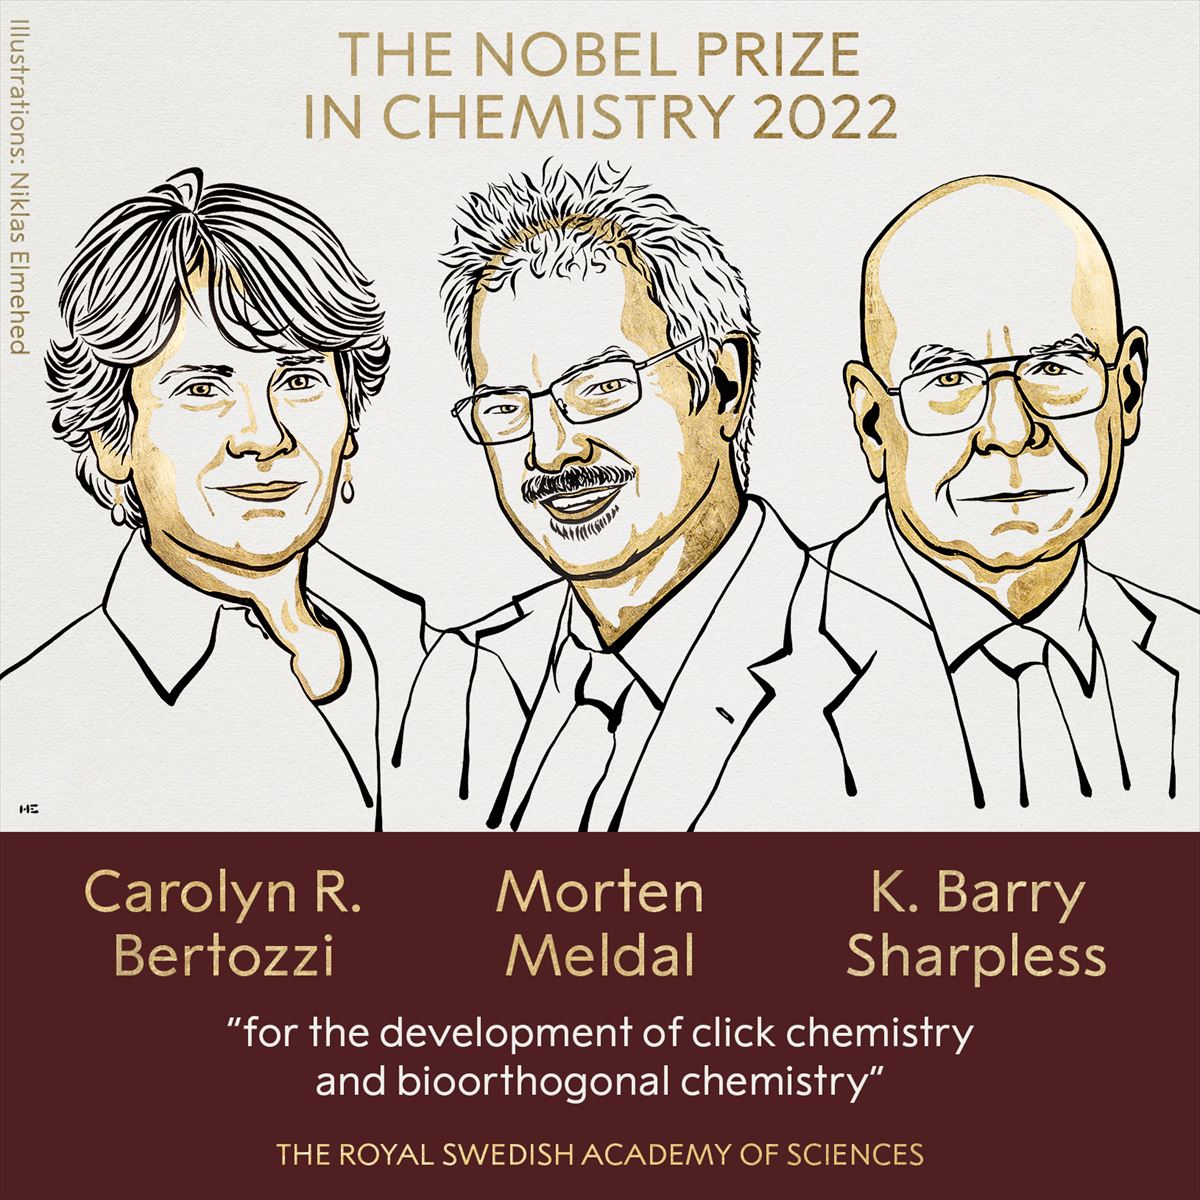 Carolyn R. Bertozzi, Morten Meldal eta K. Barry Sharpless. Argazkia: © Nobel Prize